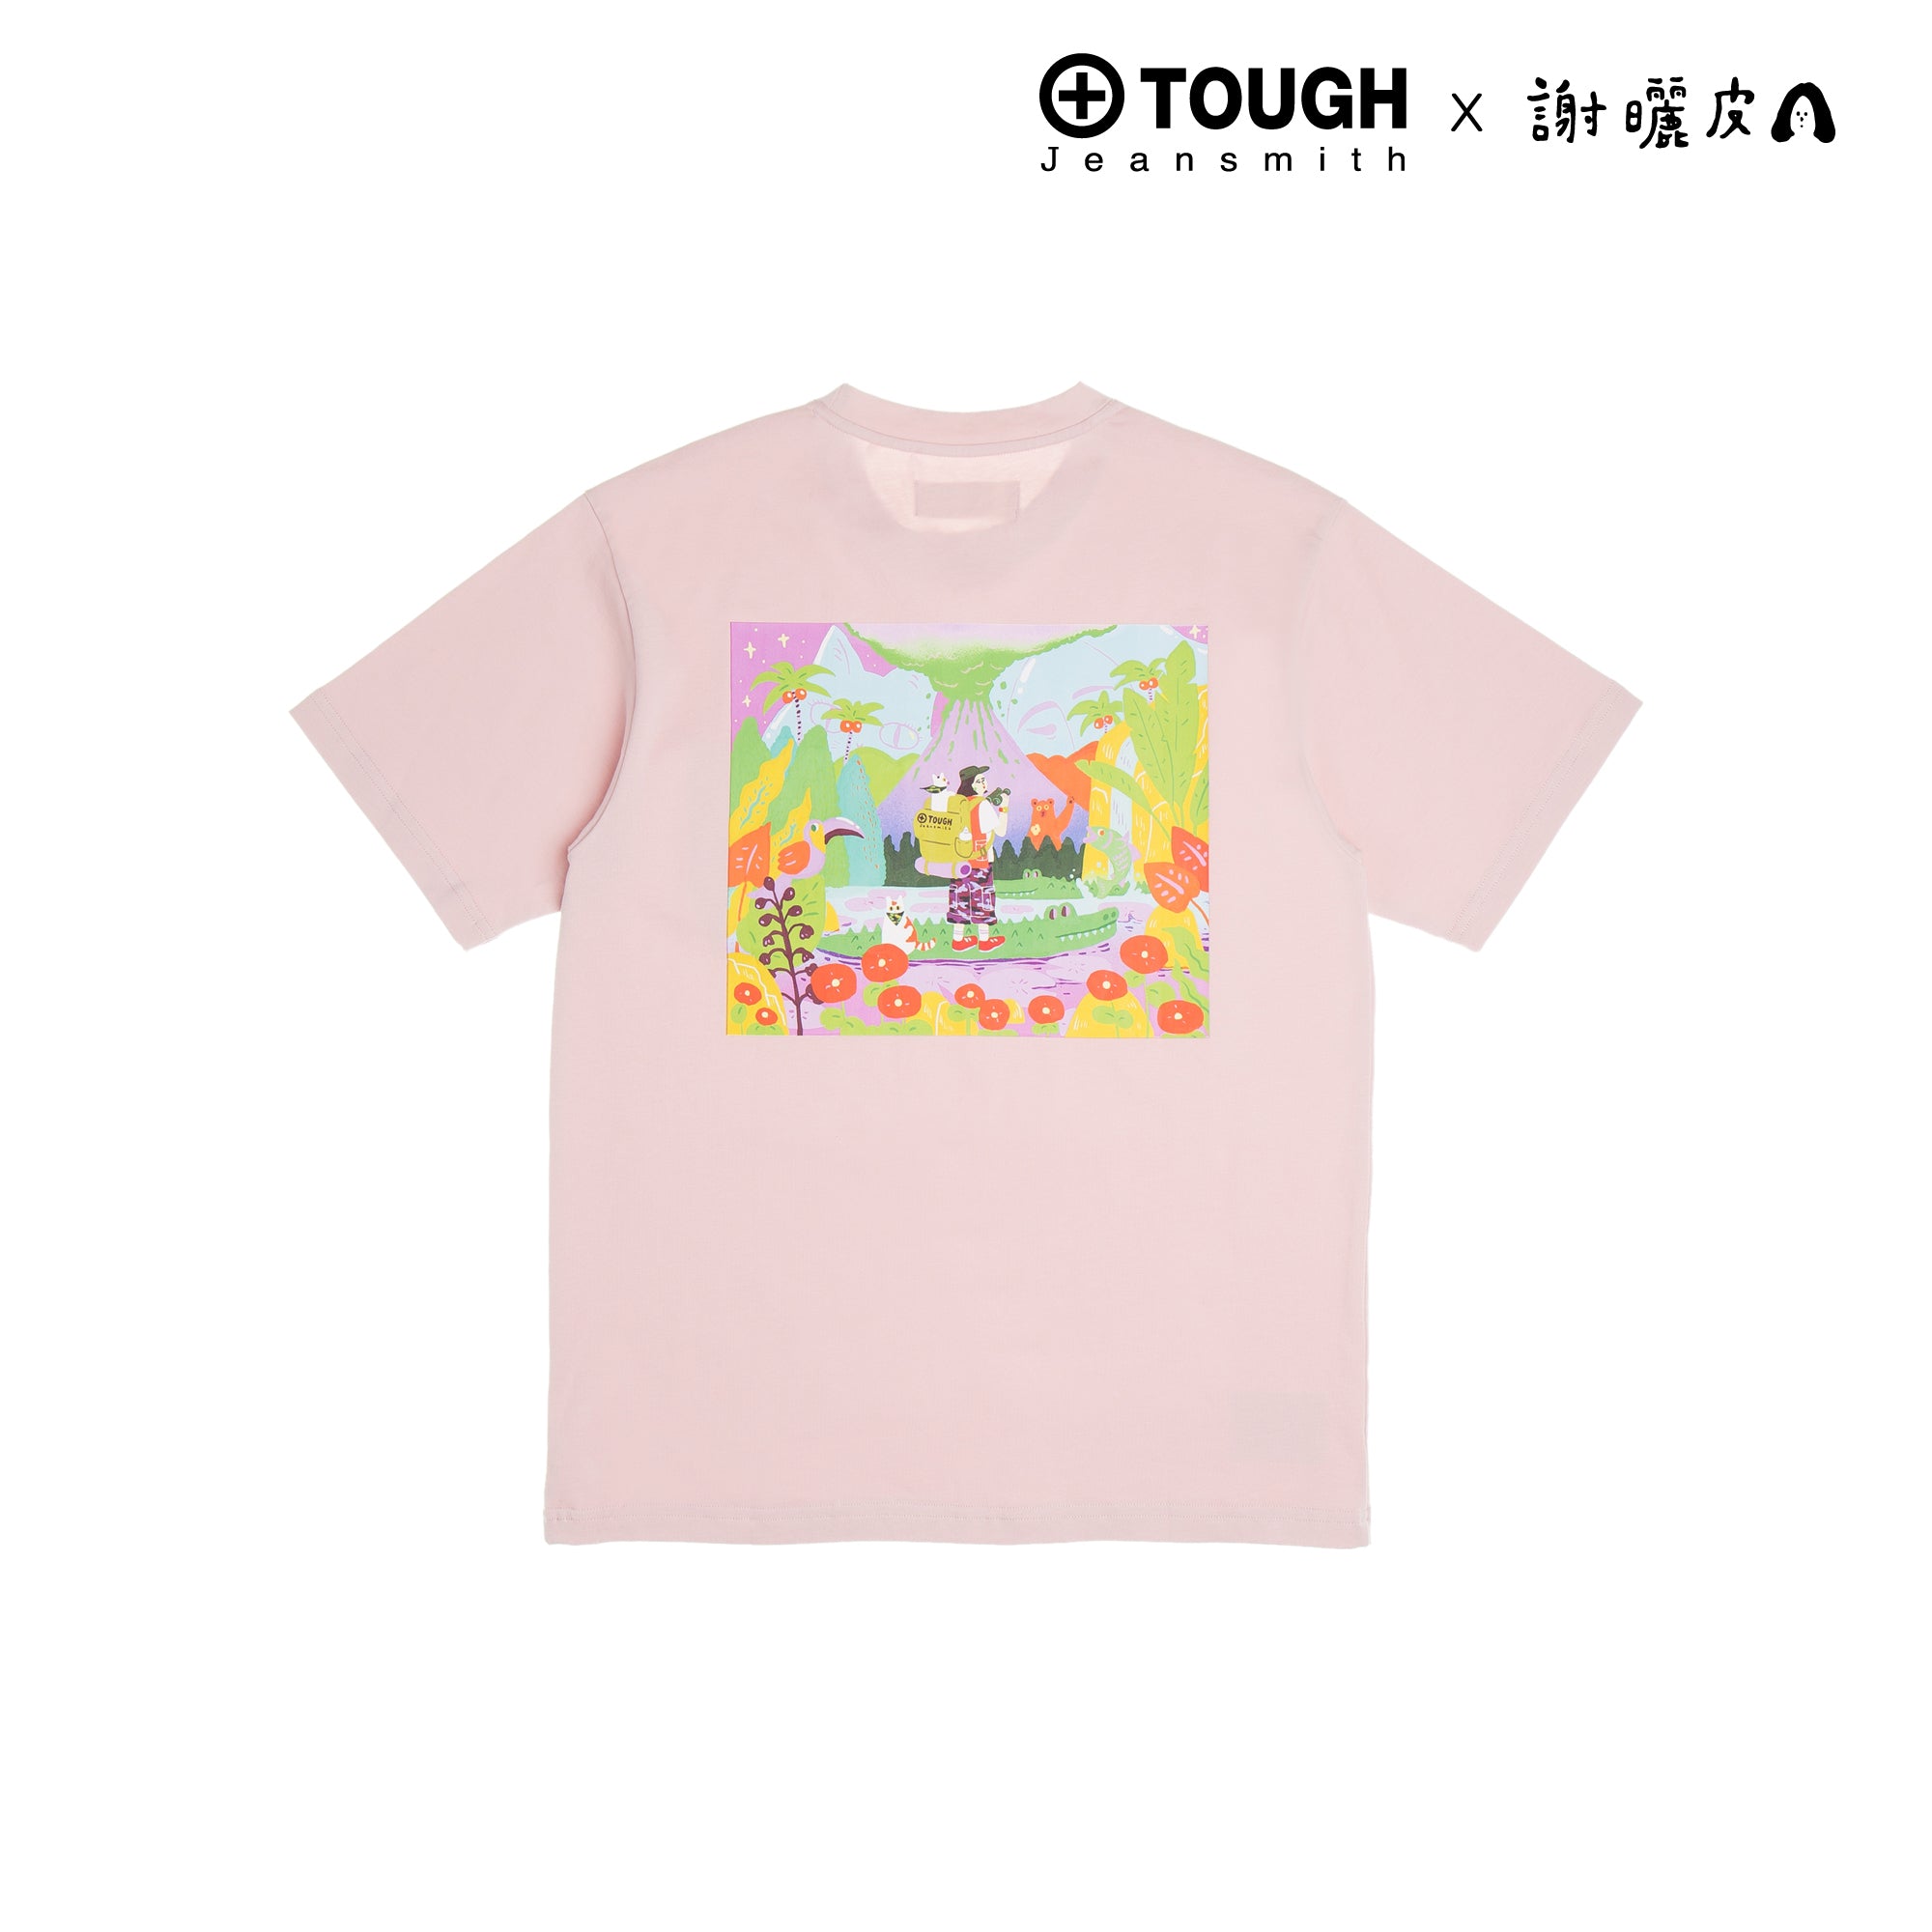 When TOUGH meets Tsesaipei 限量版T恤 #T23S-103【When TOUGH Meets特別聯乘系列】